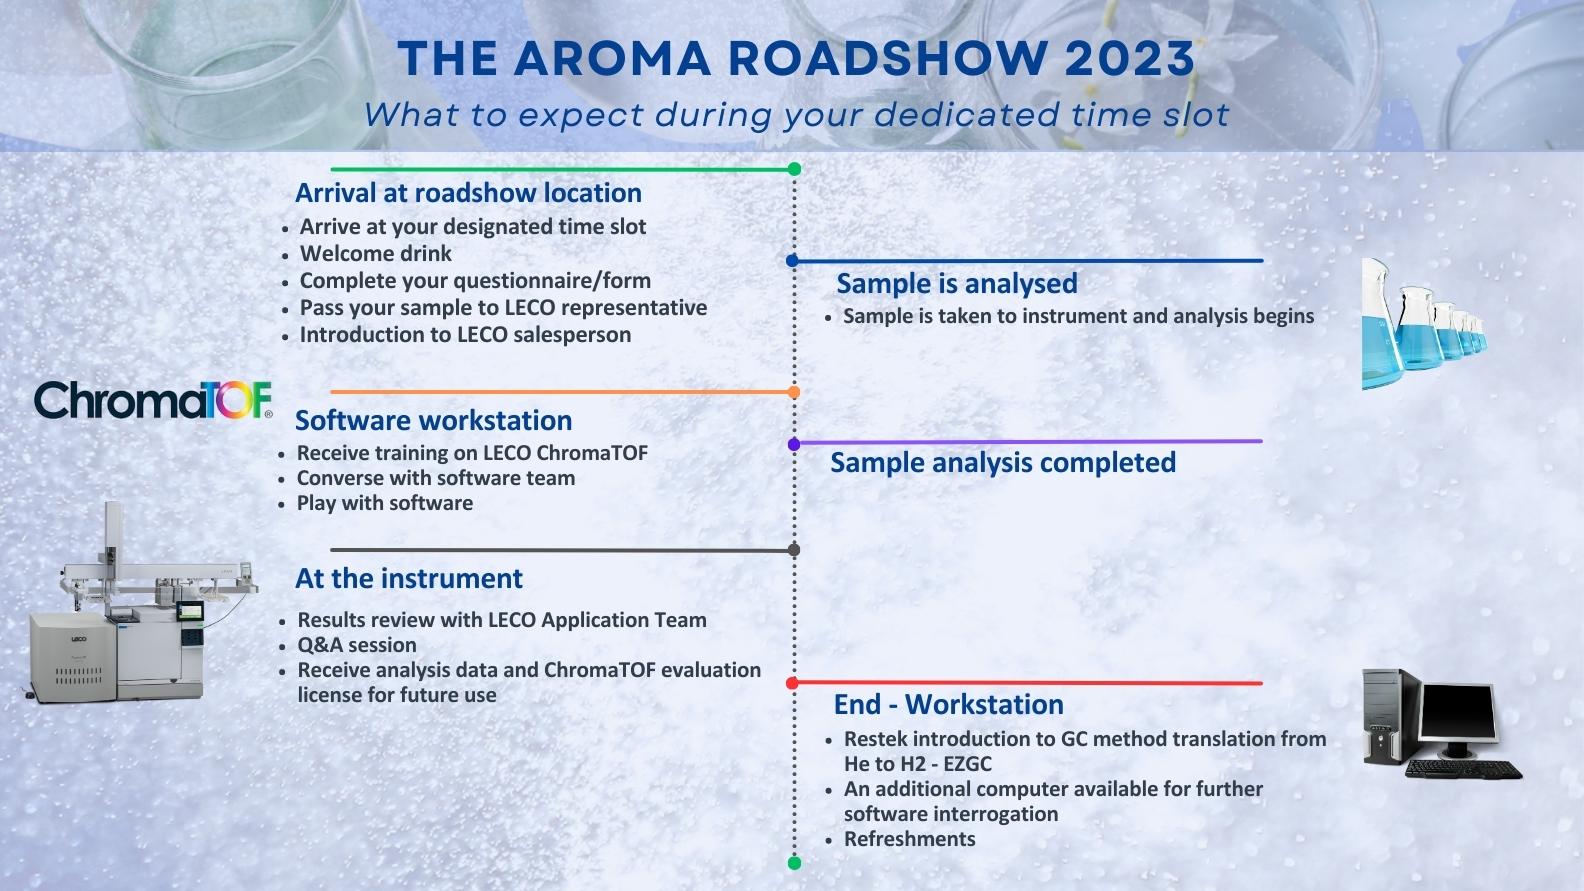 Aroma roadshow final infographic 002